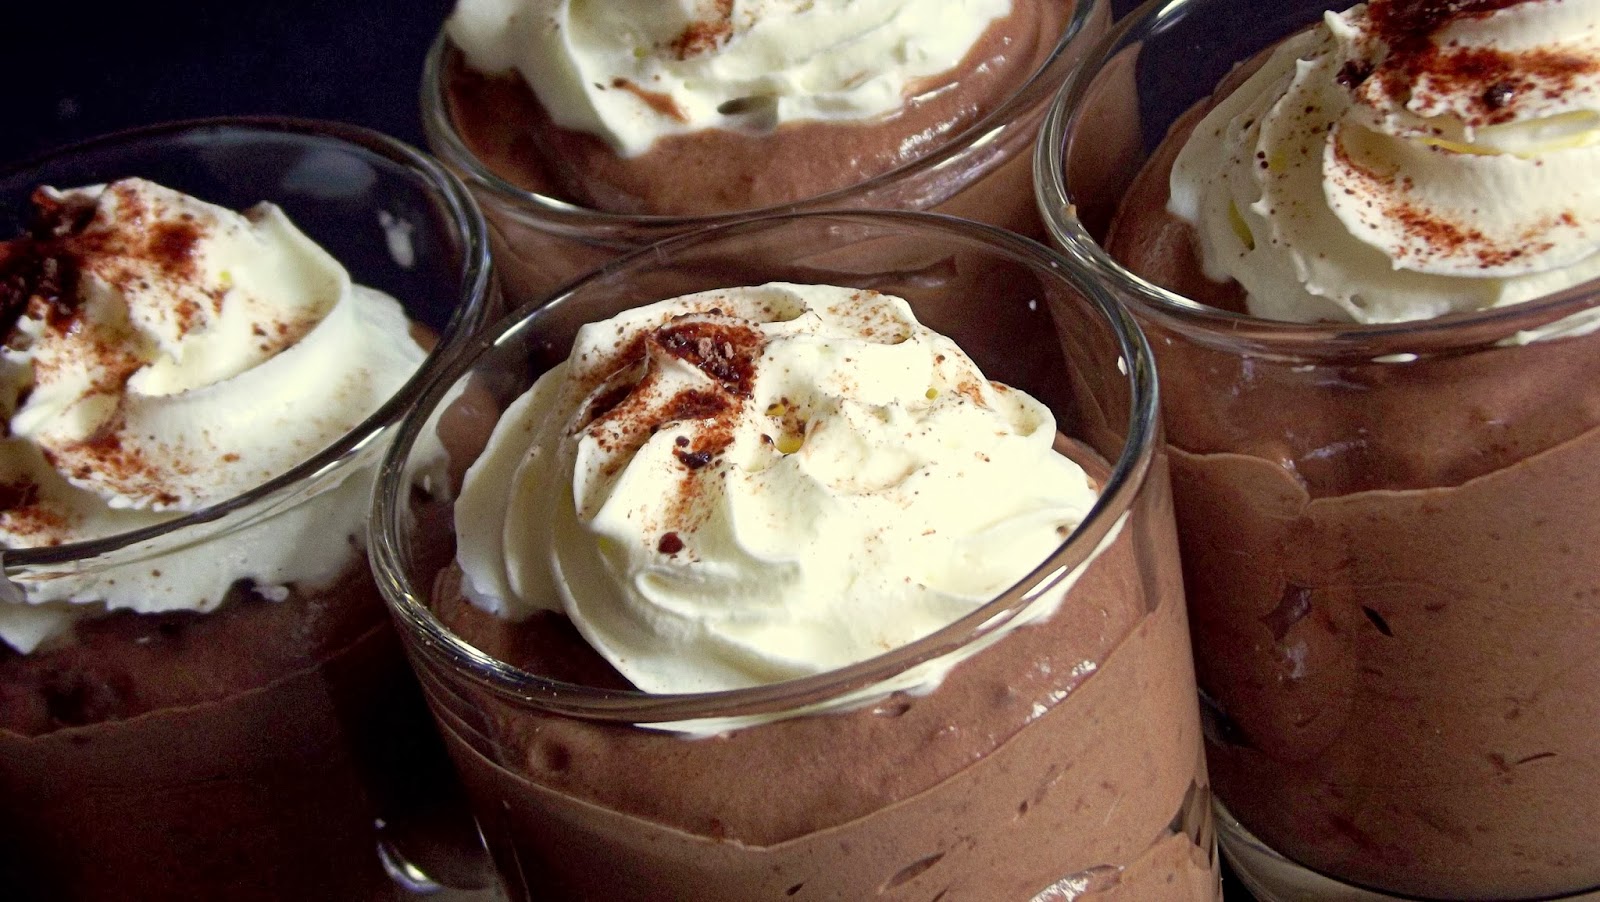 Mousse au Chocolat mit Sahne im Glas | Dessert im glas, Nutella ...